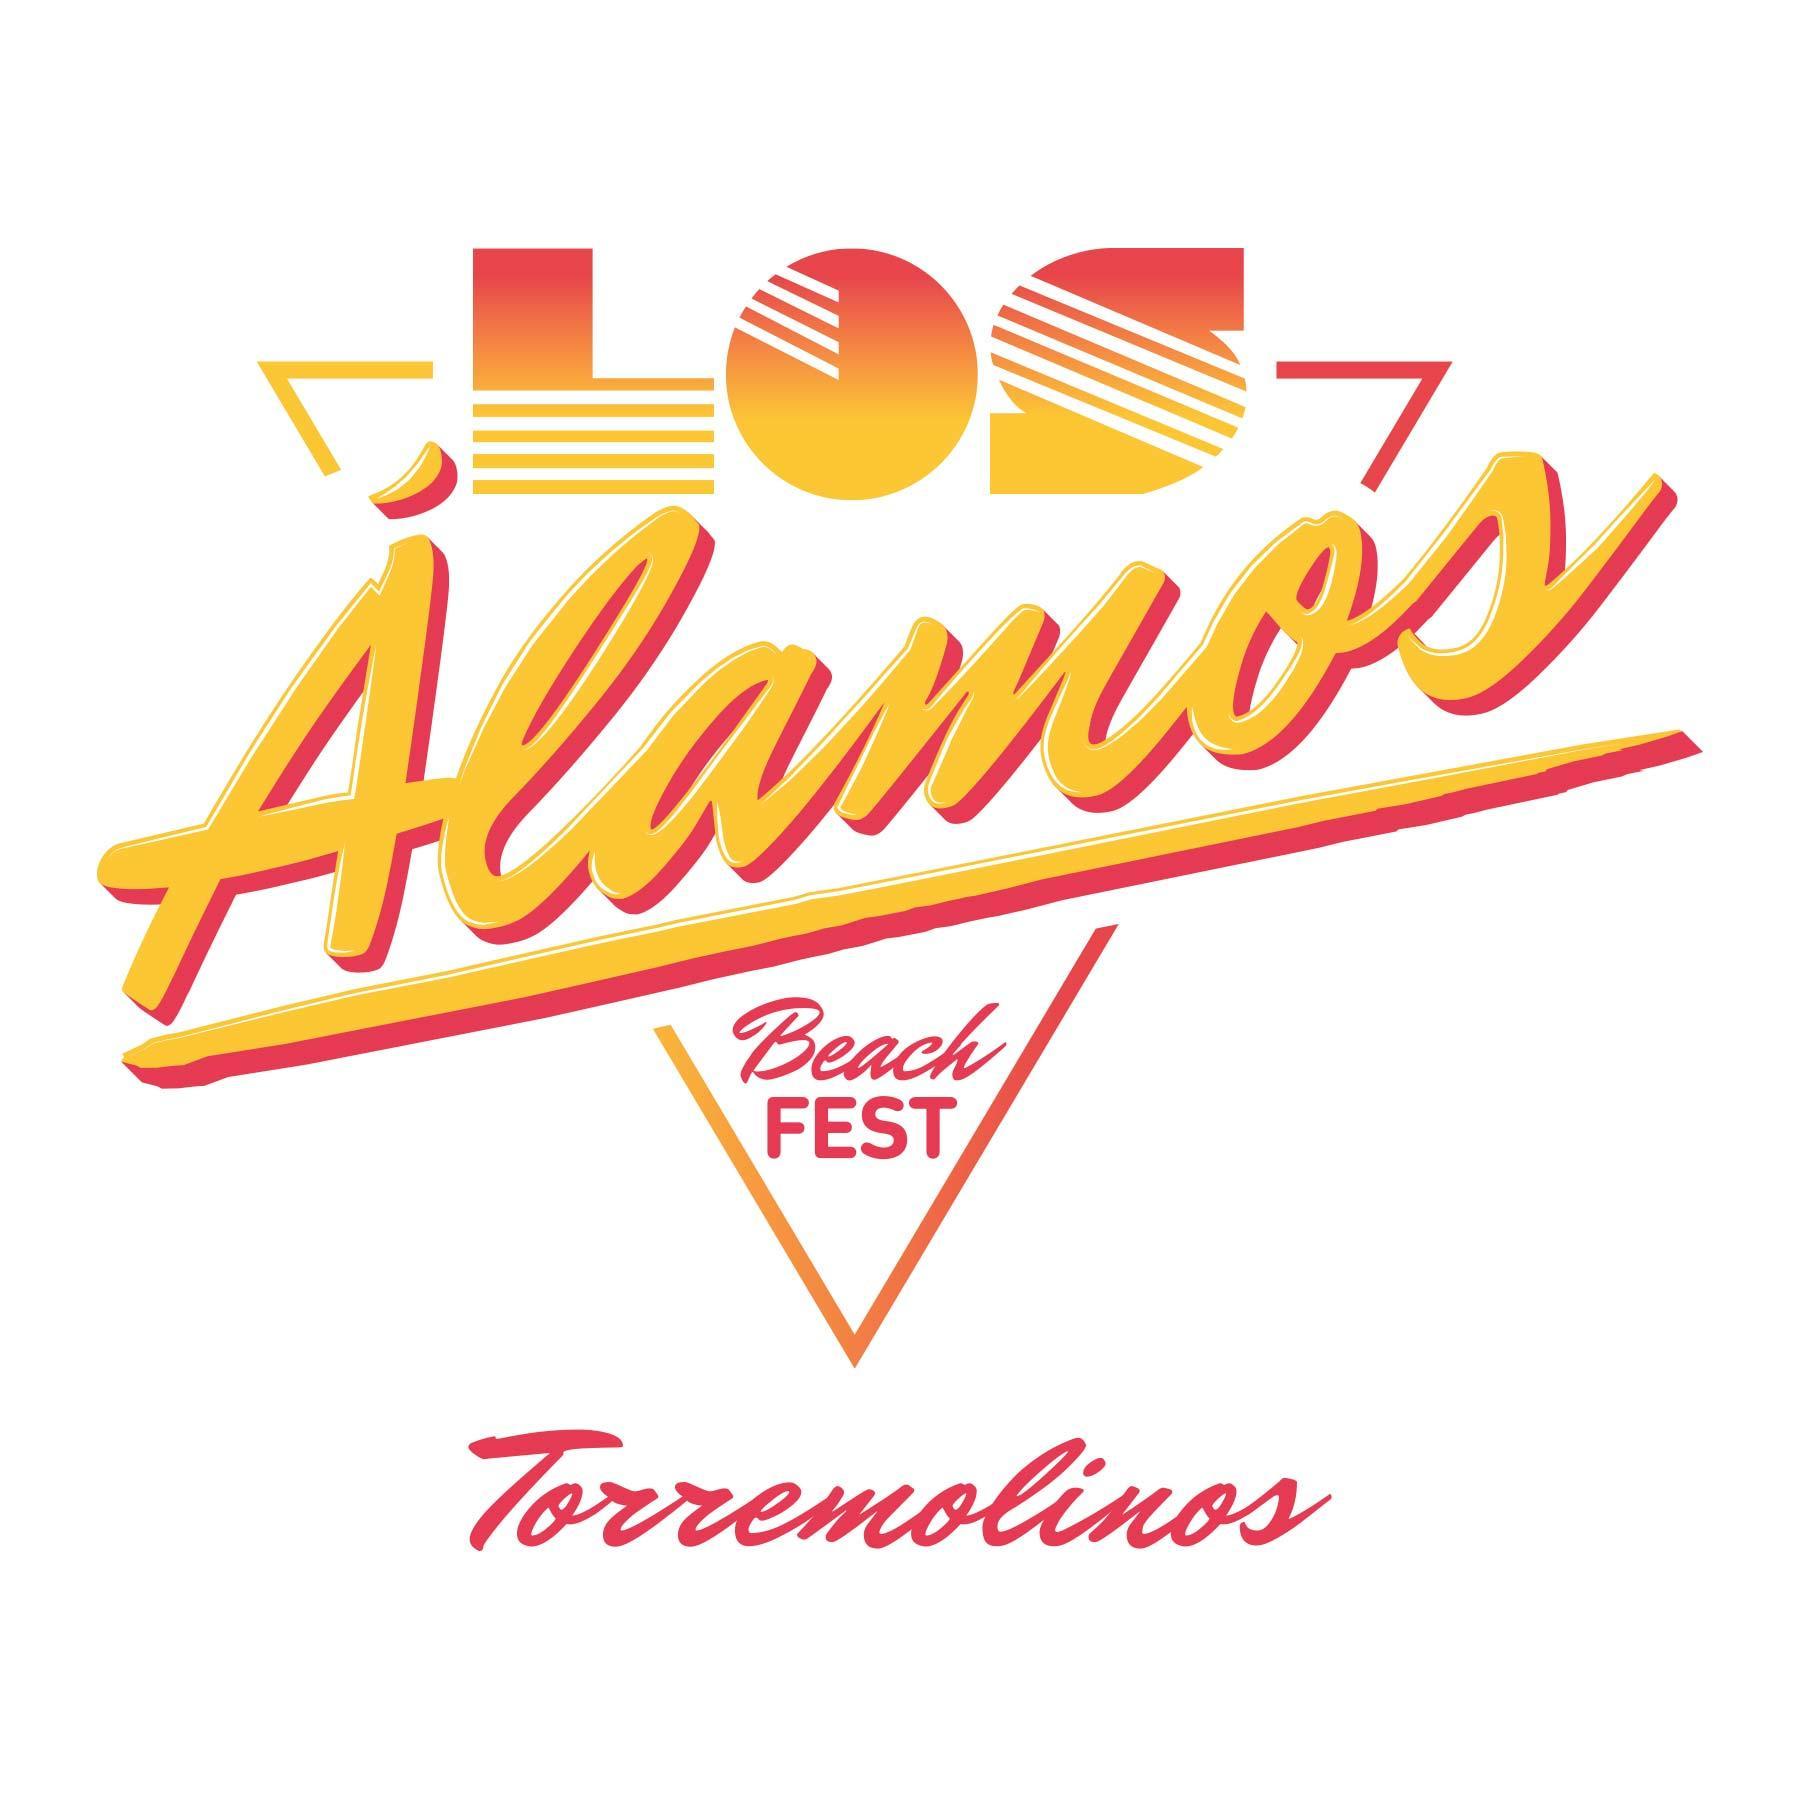 Los Alamos Beach Festival confirma a DON DIABLO